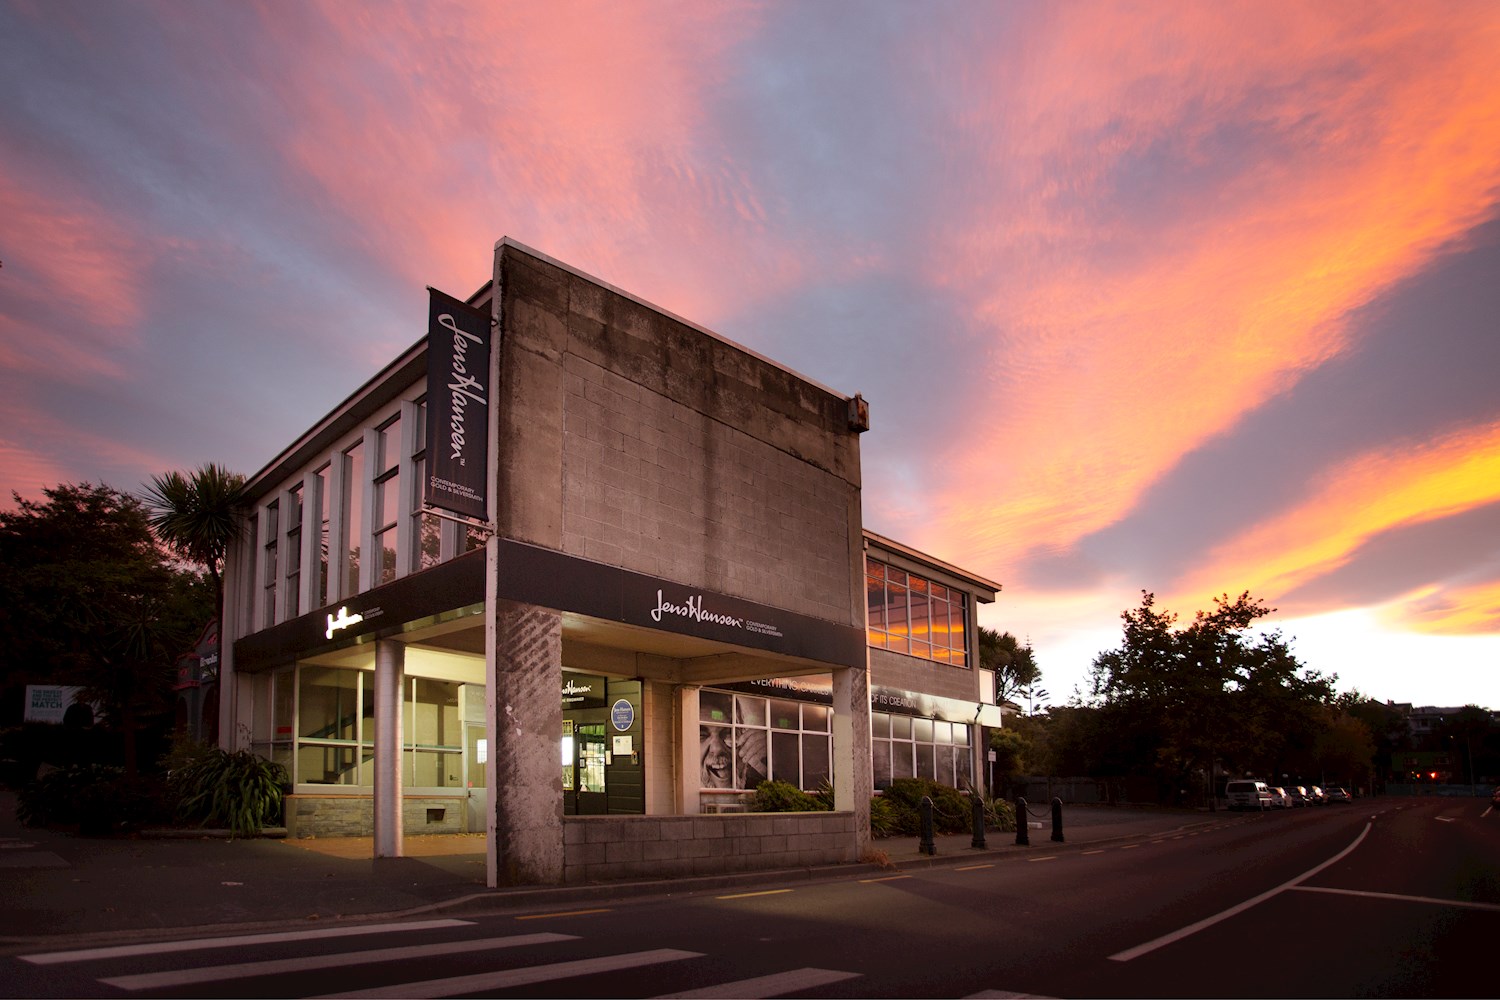 Sunset over the Jens Hansen studio workshop, 320 Trafalgar Square, Nelson , New Zealand. Photo credit John-Paul Pochin